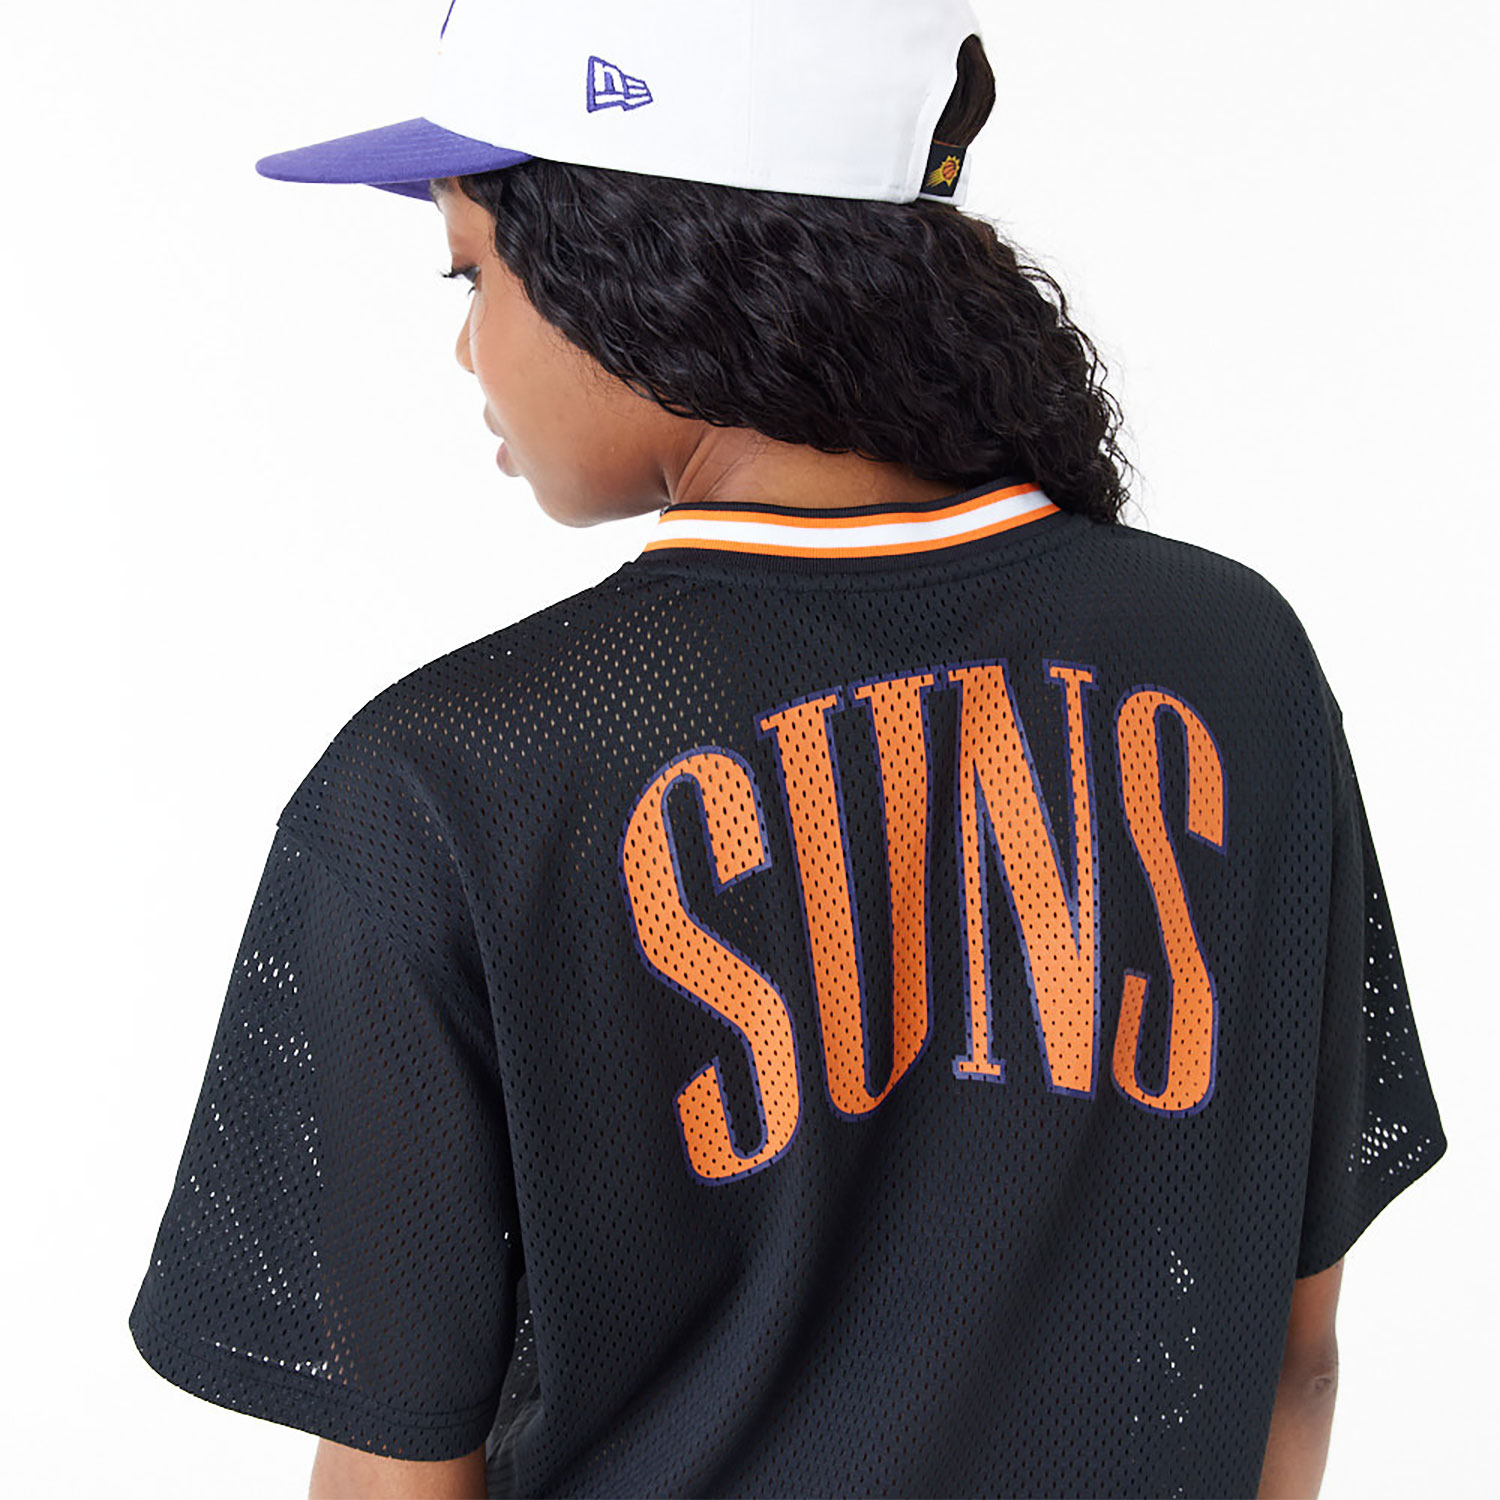 Phoenix Suns Womens NBA Black Mesh Dress